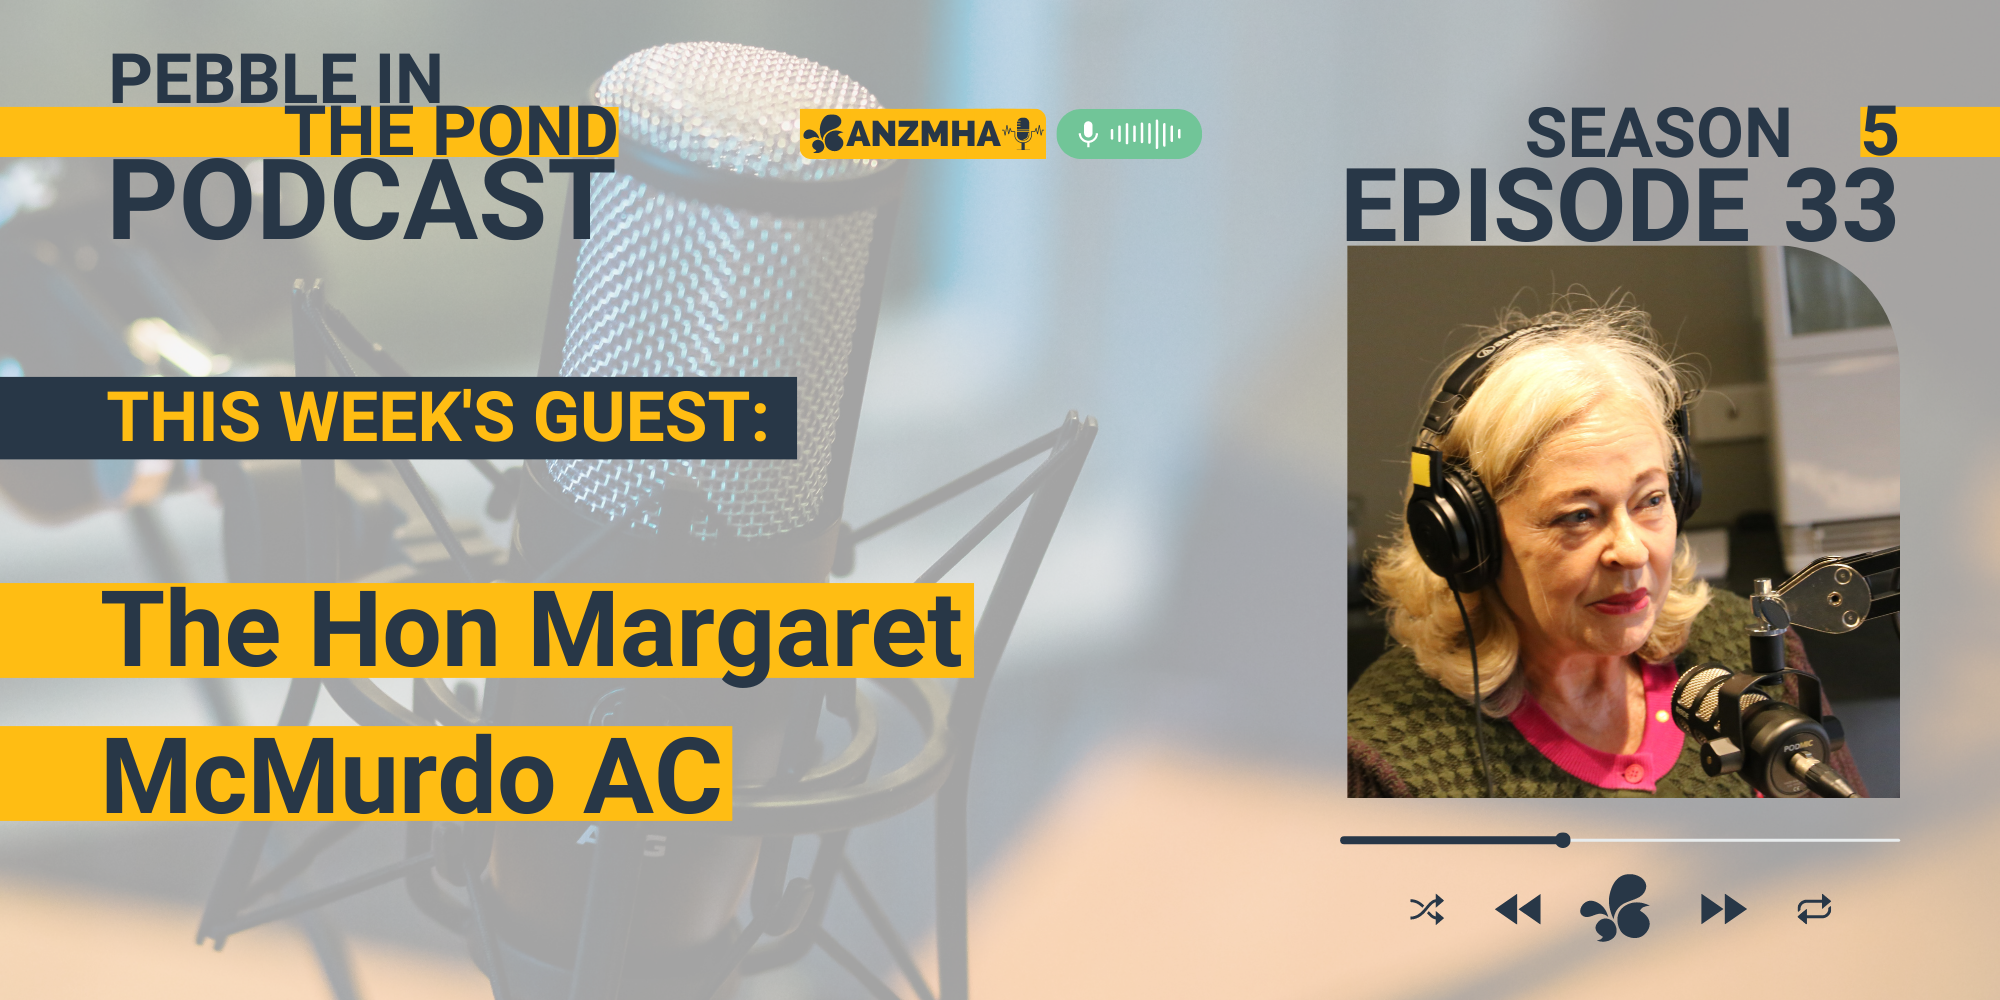 ANZMHA Podcast: The Hon Margaret McMurdo AC